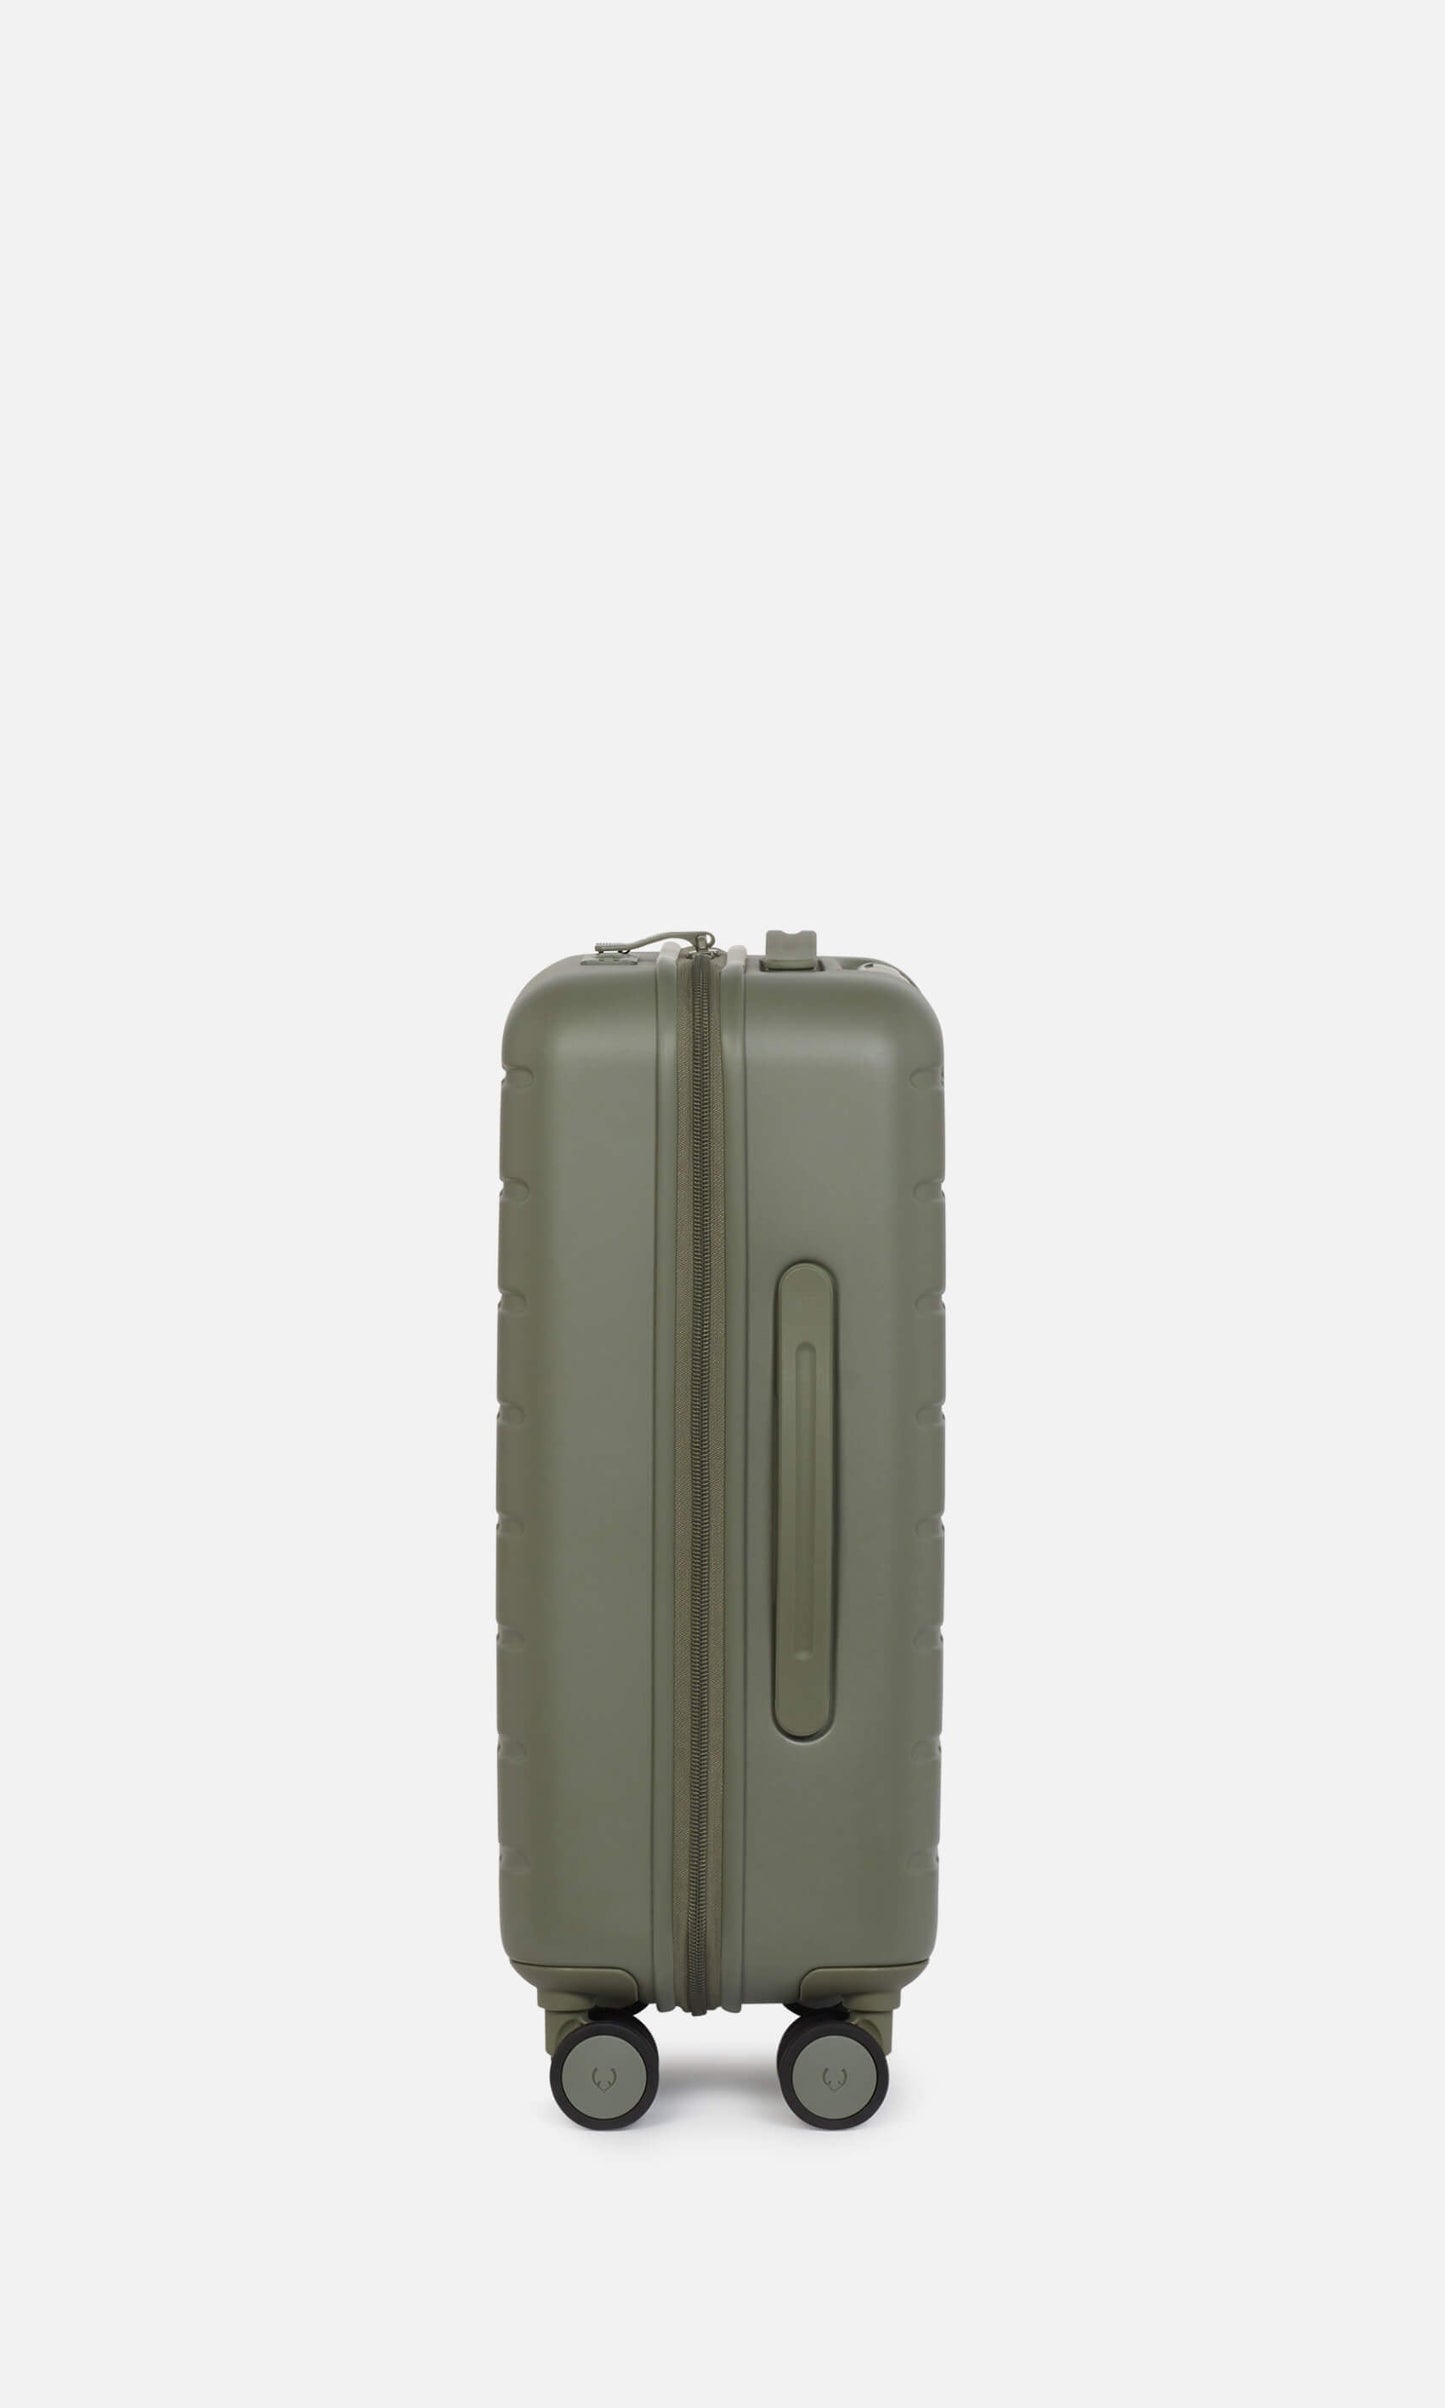 Antler Luggage -  Stamford cabin in field green - Hard Suitcases Stamford Cabin Suitcase Green | Hard Luggage | Antler UK